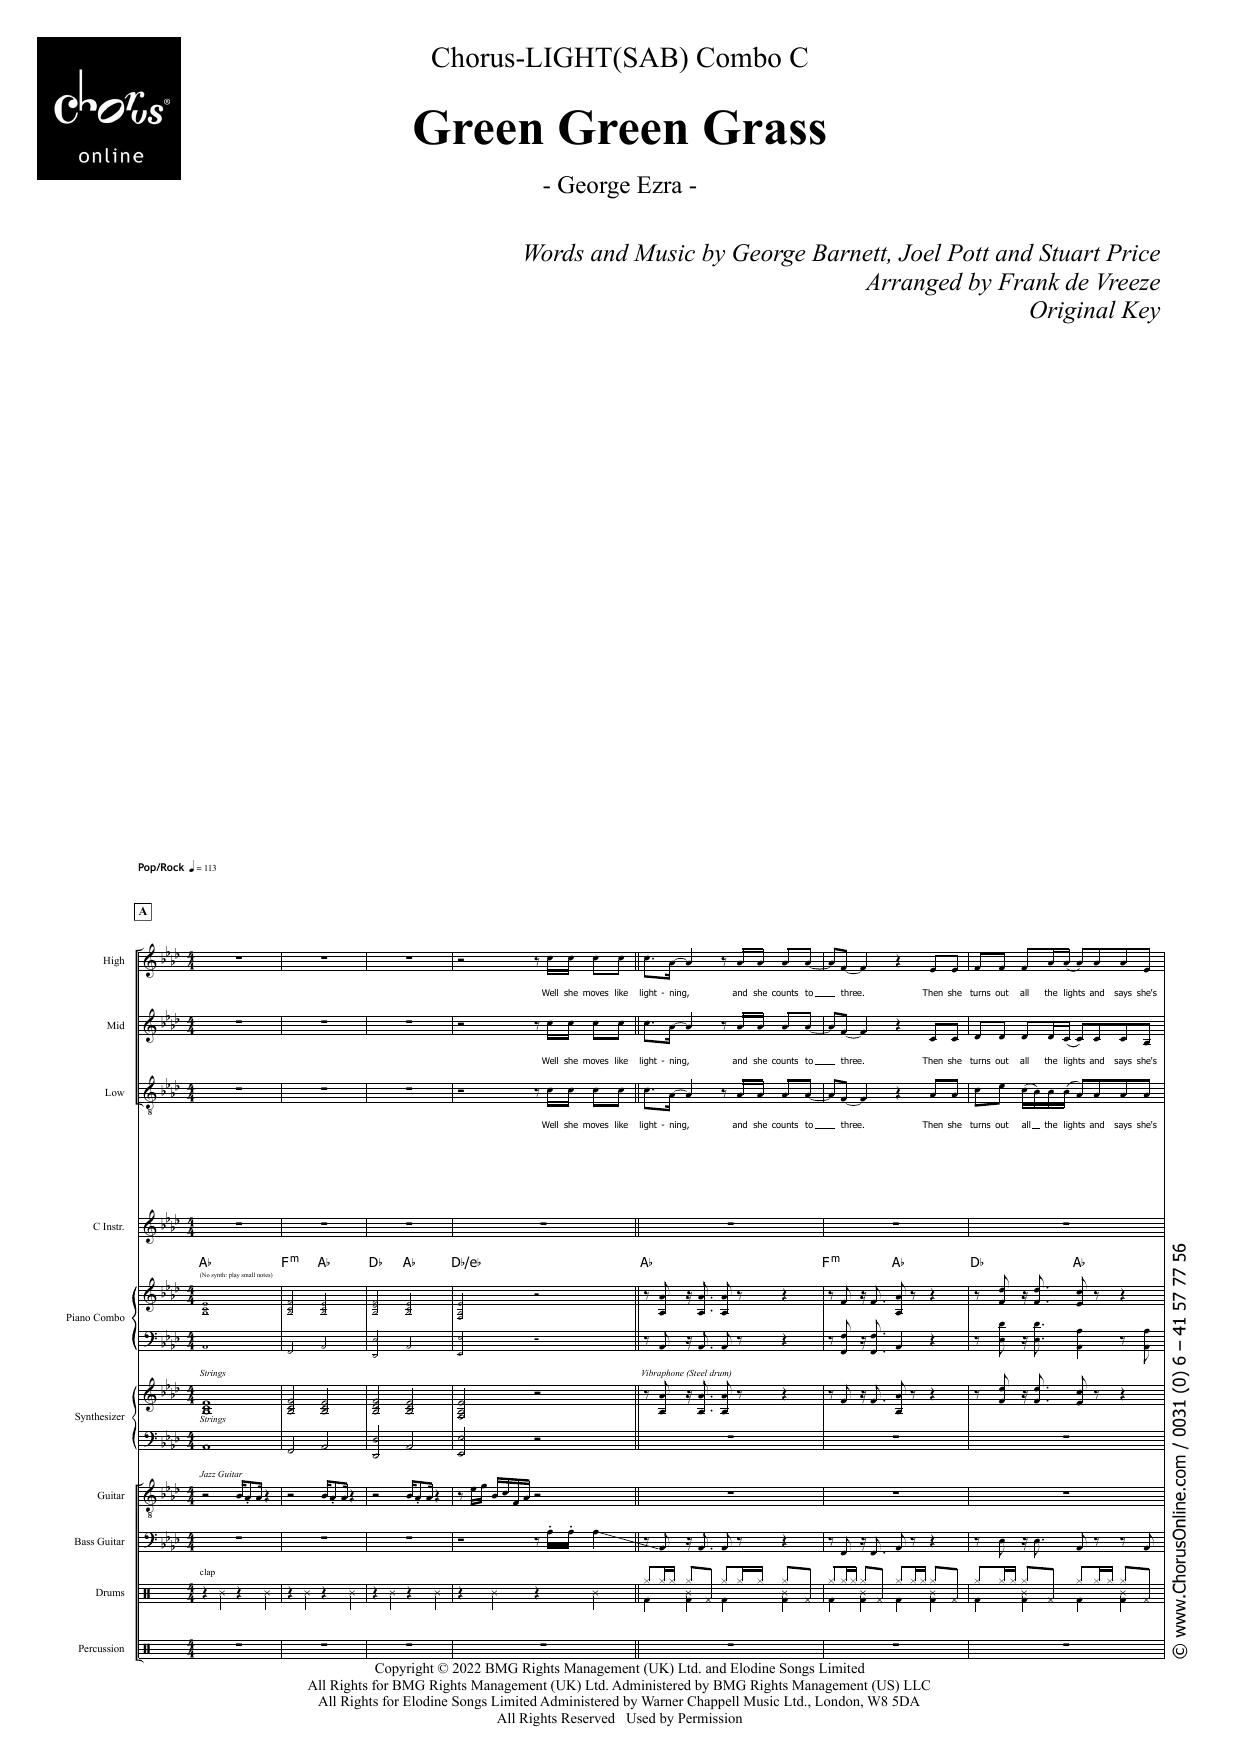 George Ezra Green Green Grass (arr. Frank de Vreeze) sheet music notes printable PDF score